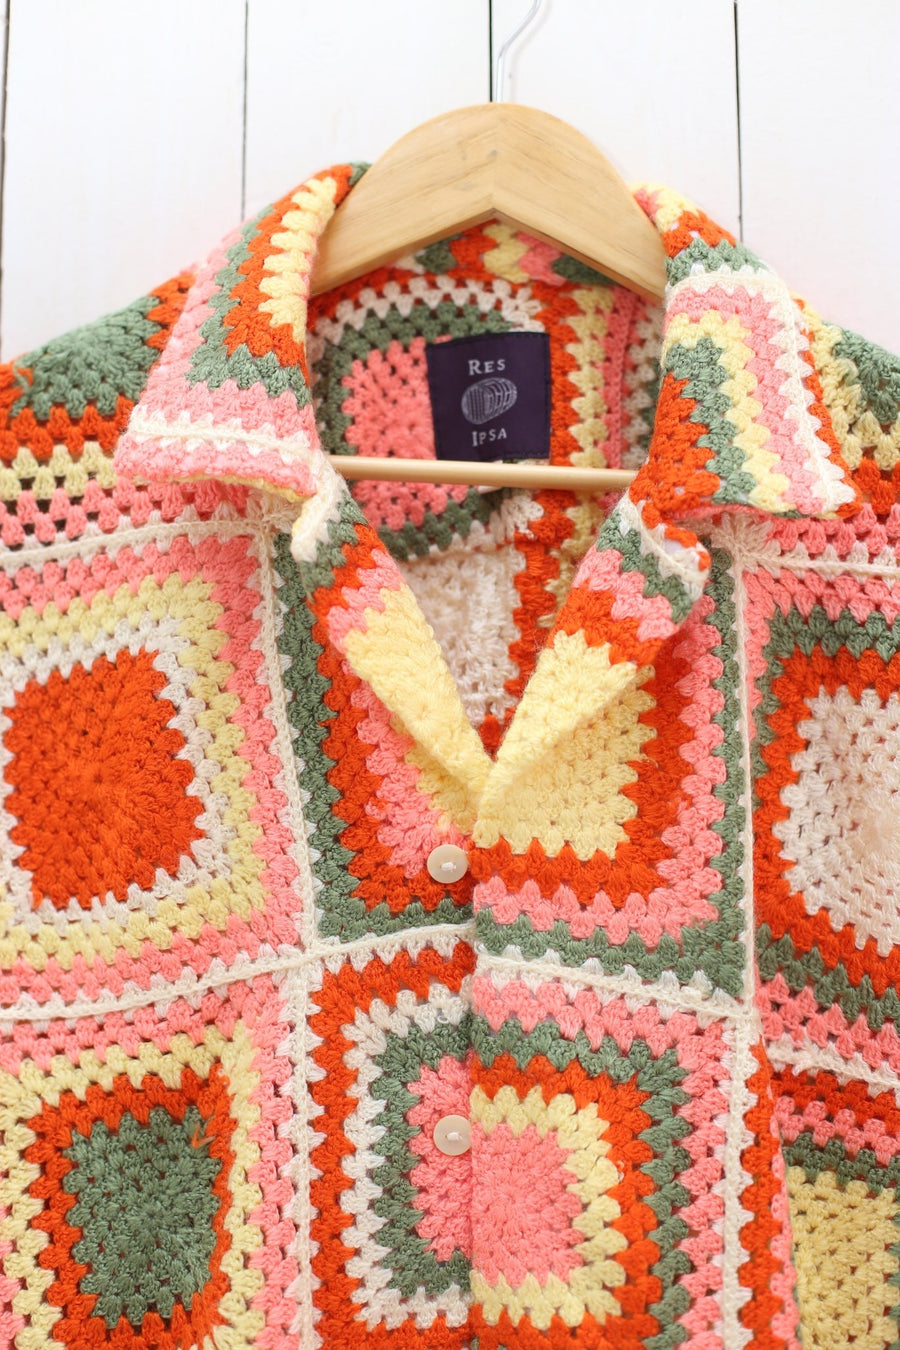 Crochet Camp Shirt #1 - RES IPSA